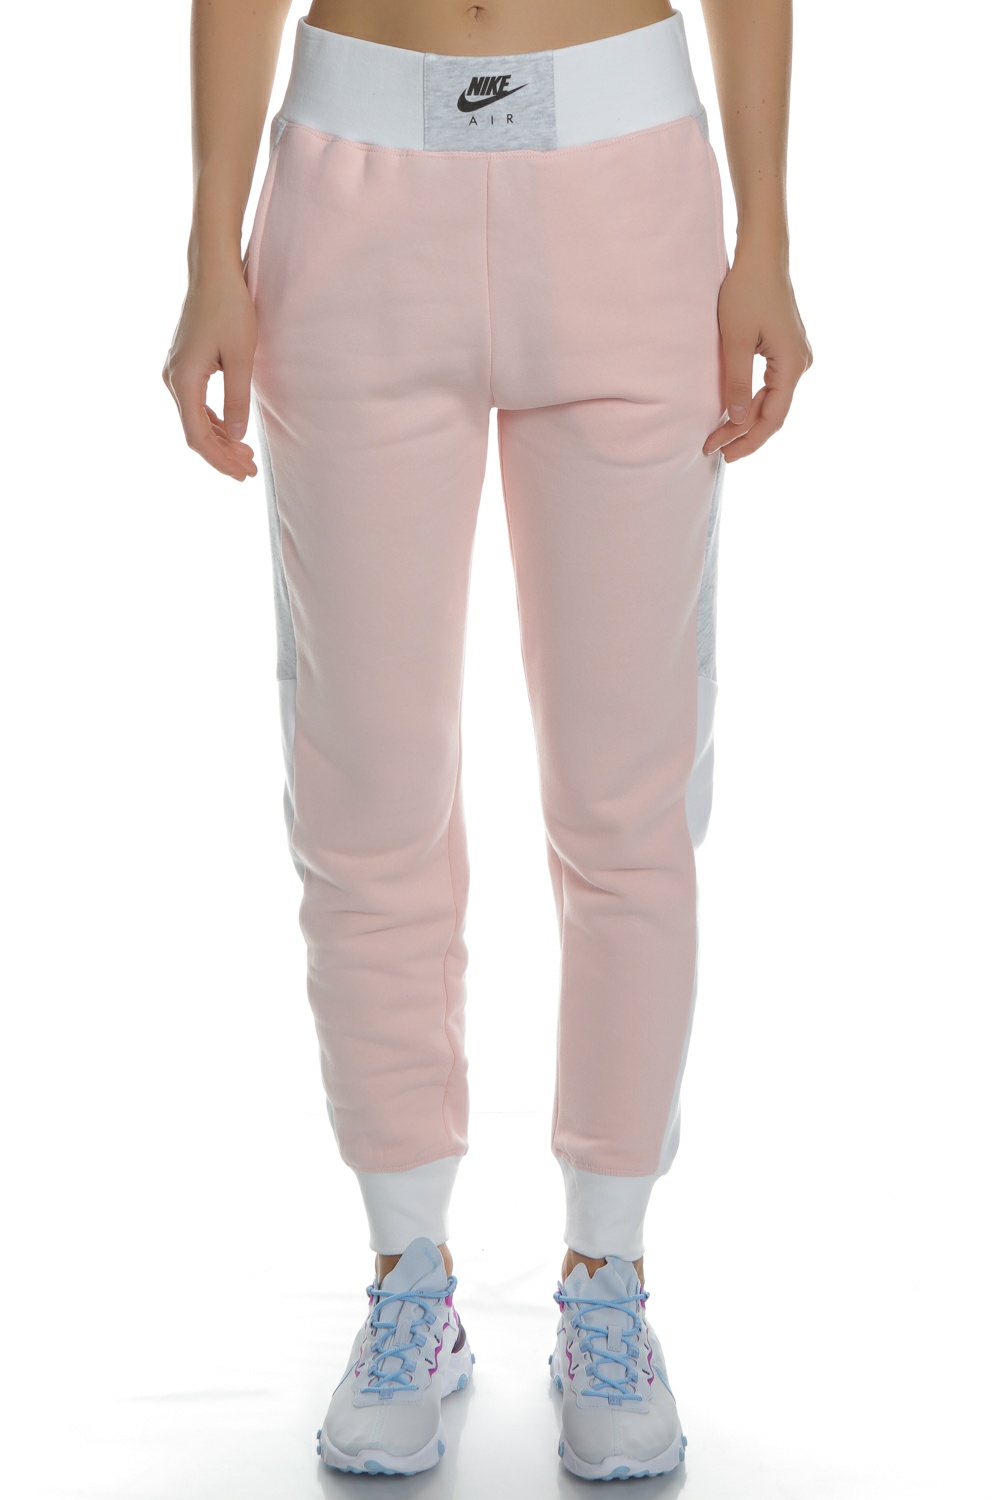 NIKE - Γυναικείο παντελόνι φόρμας NIKE AIR ροζ Γυναικεία/Ρούχα/Αθλητικά/Φόρμες